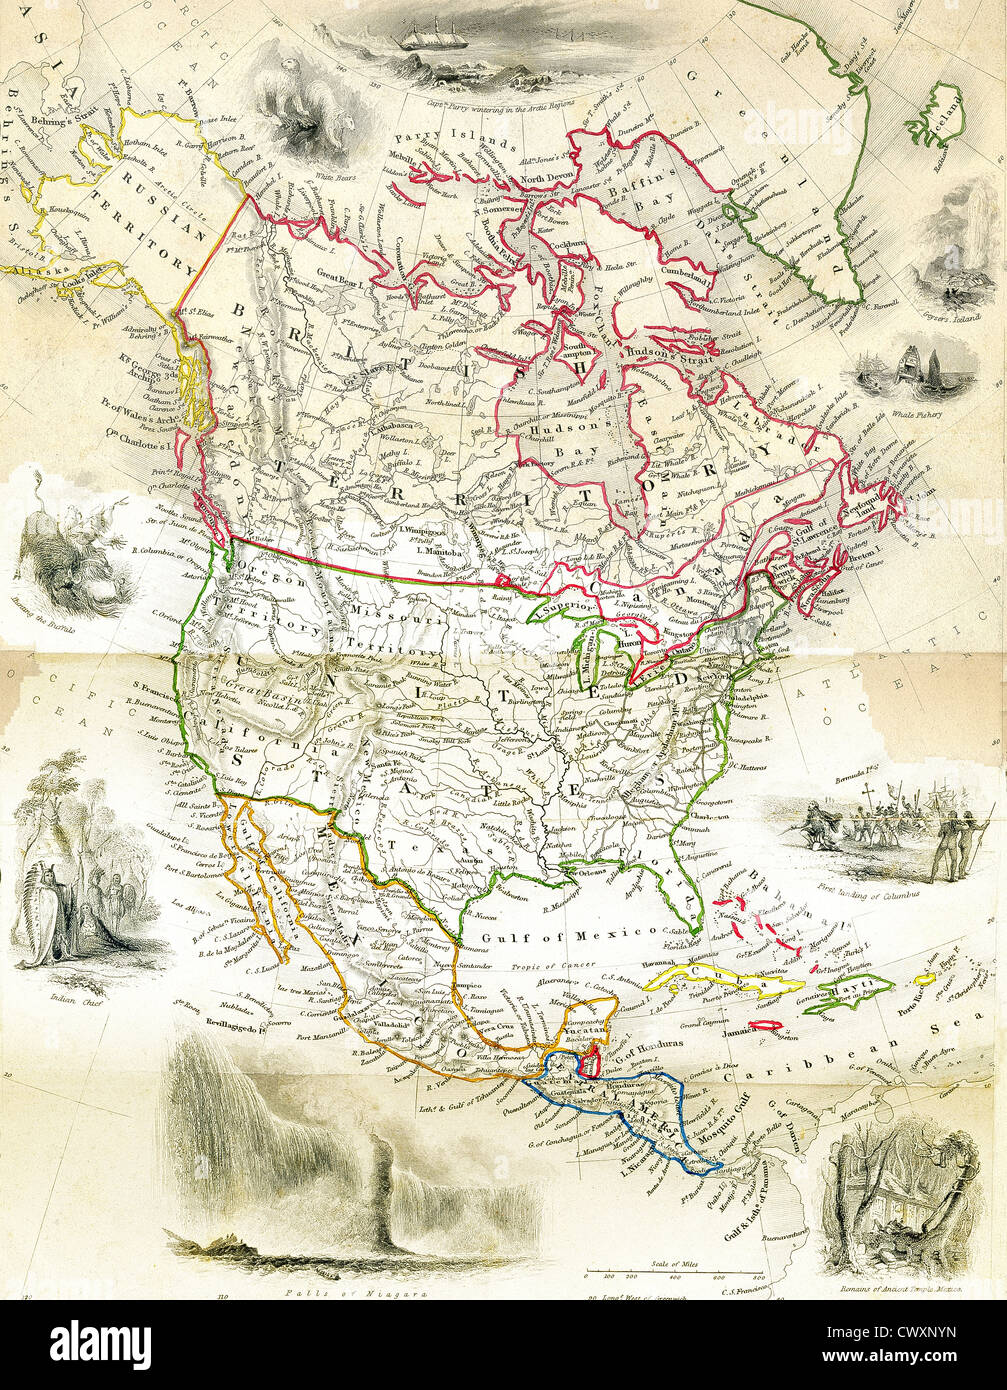 1856 mappa di n. America, con scene di orsi, Capitano Parry, geyser Isola, balene, Columbus, Messico, Niagara Falls, Indiani. Foto Stock